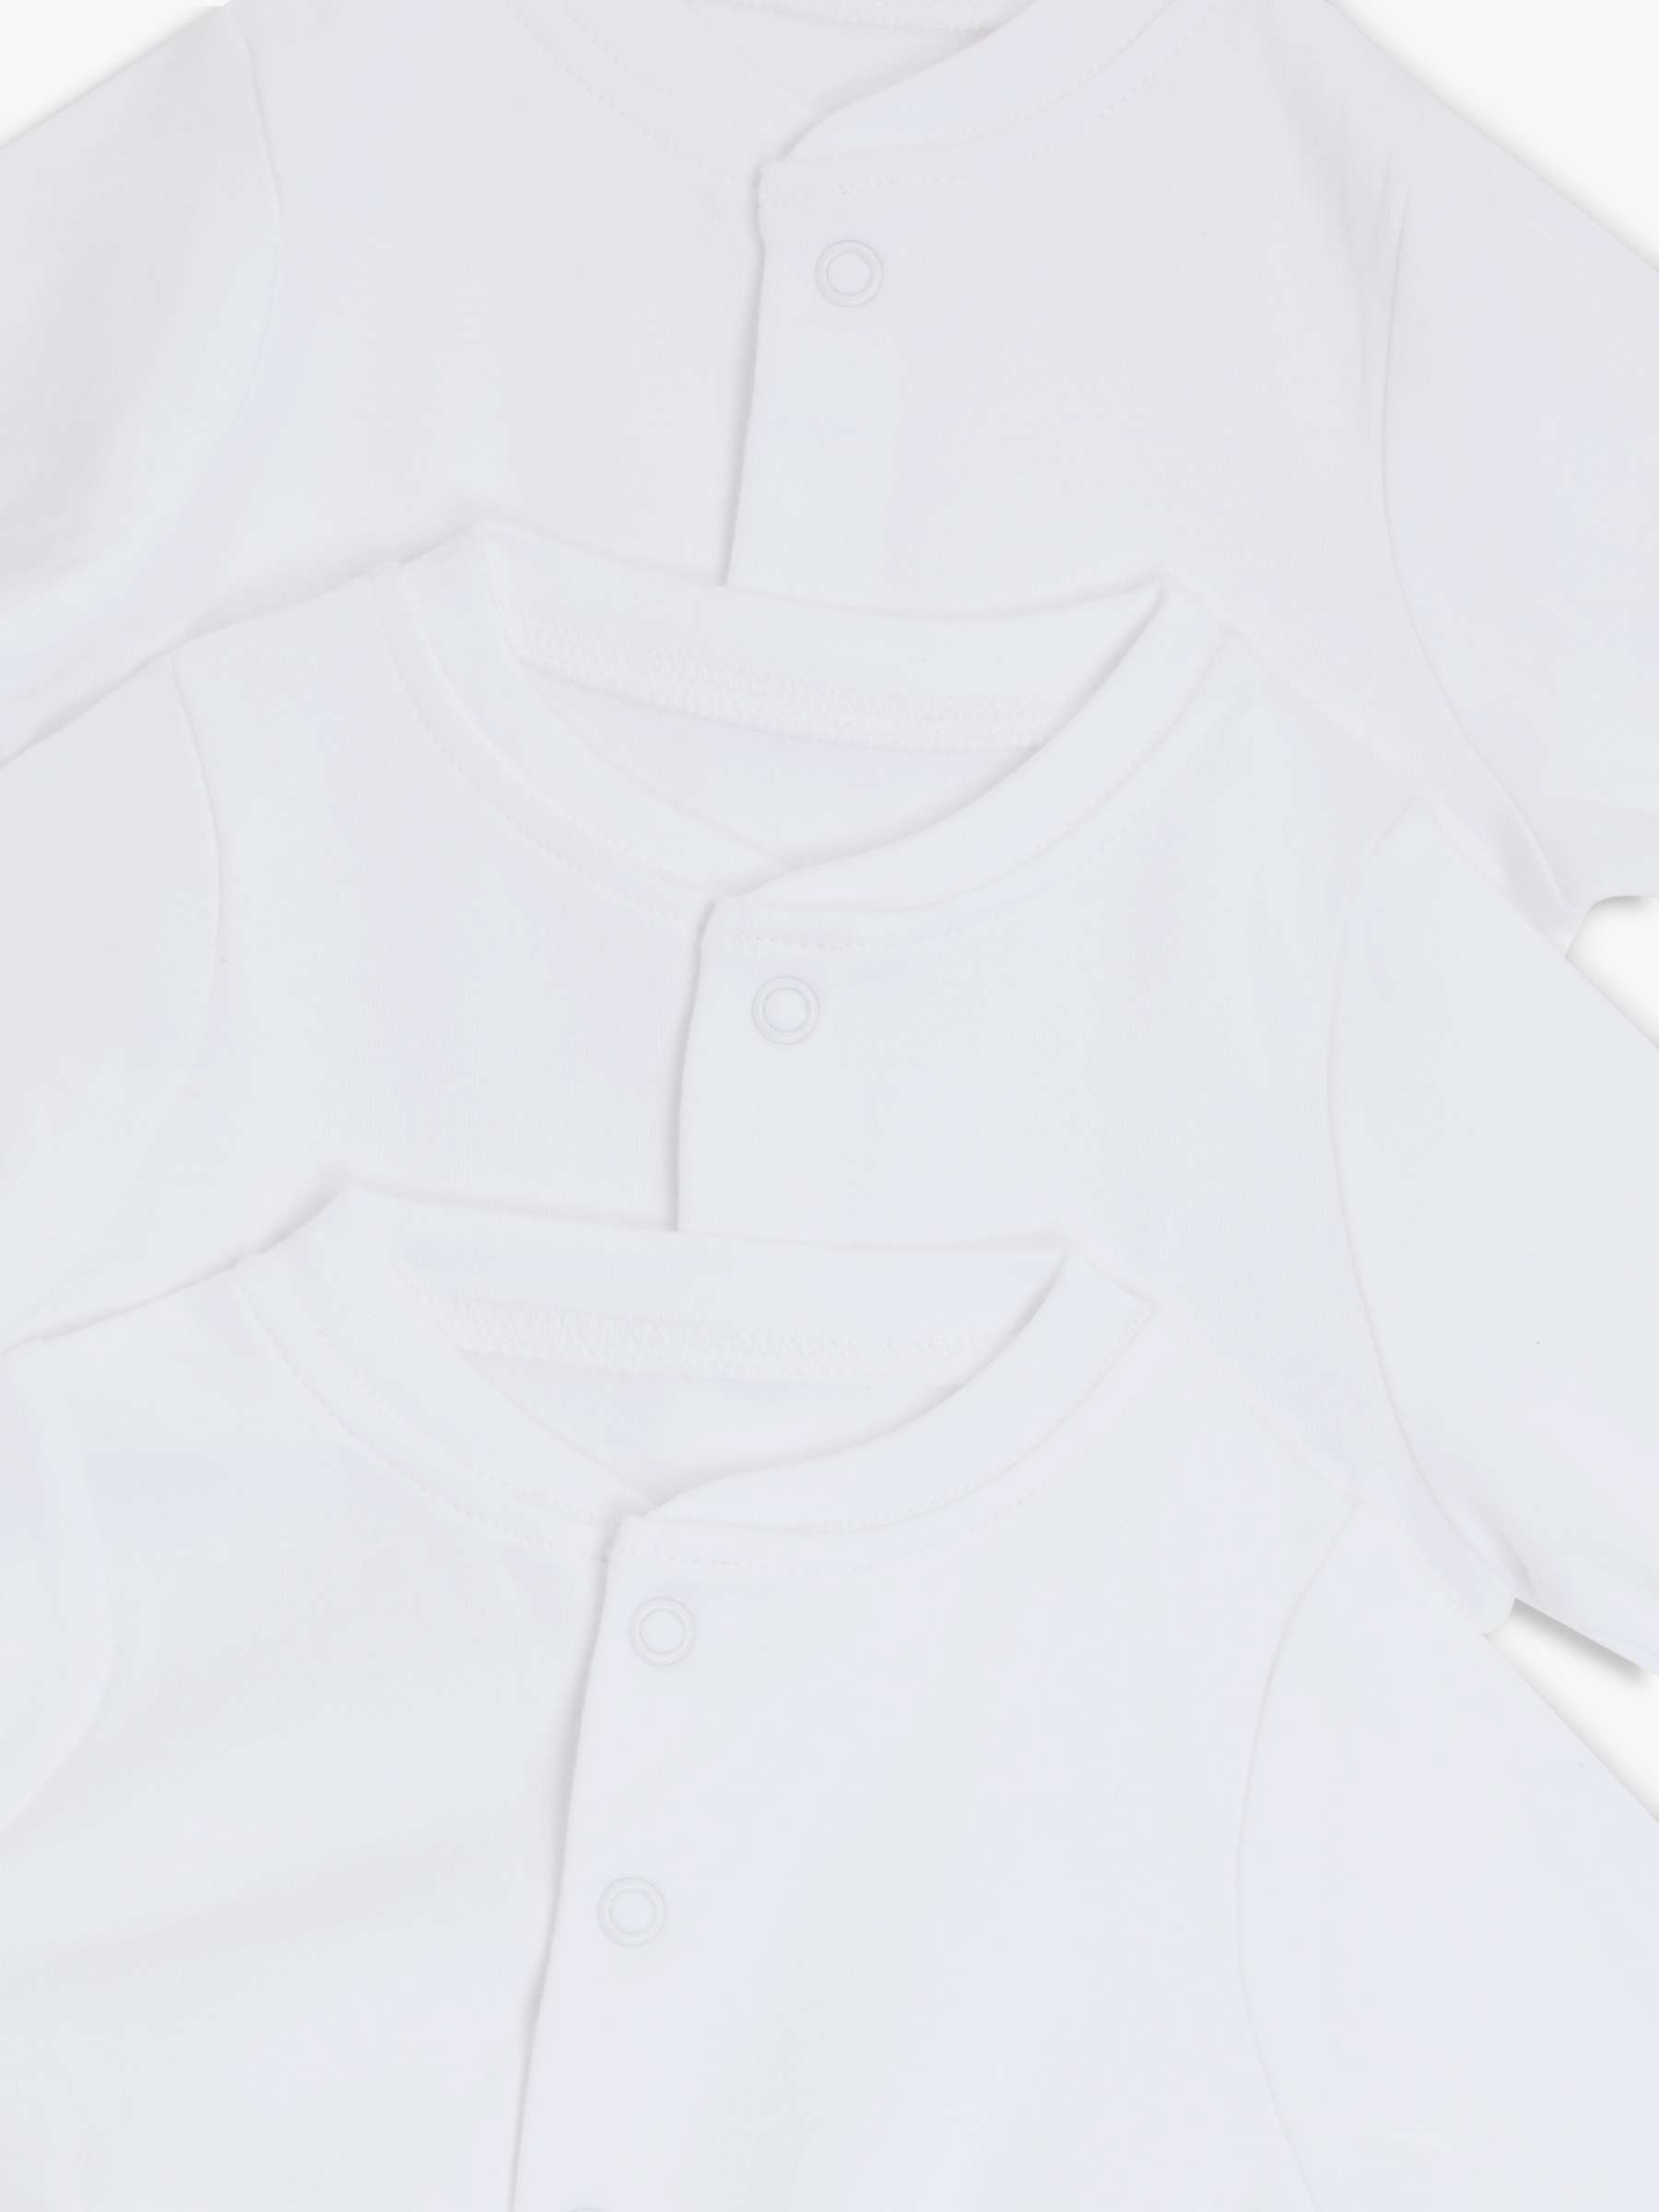 Buy John Lewis Baby GOTS Organic Cotton Long Sleeve Sleepsuit, Pack of 5, White Online at johnlewis.com